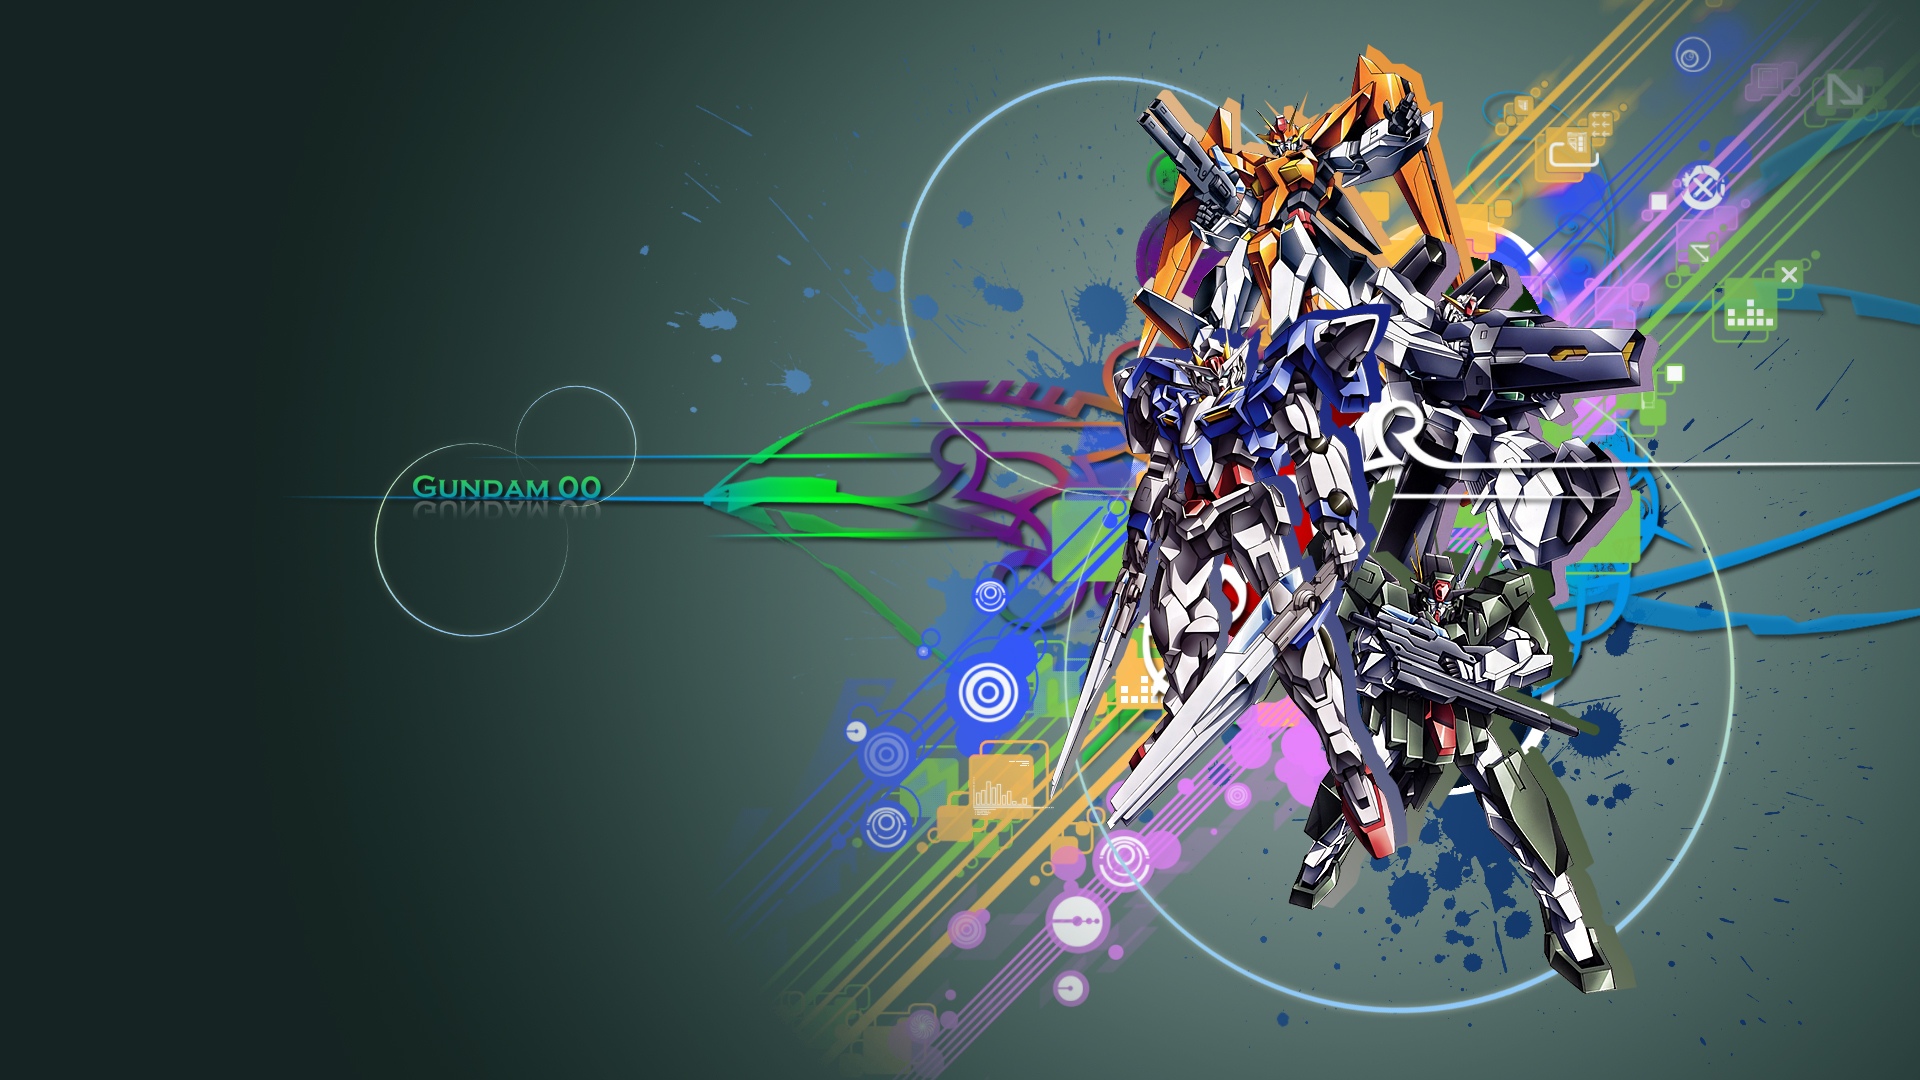 Oo Gundam Wallpaper 1080p - HD Wallpaper 